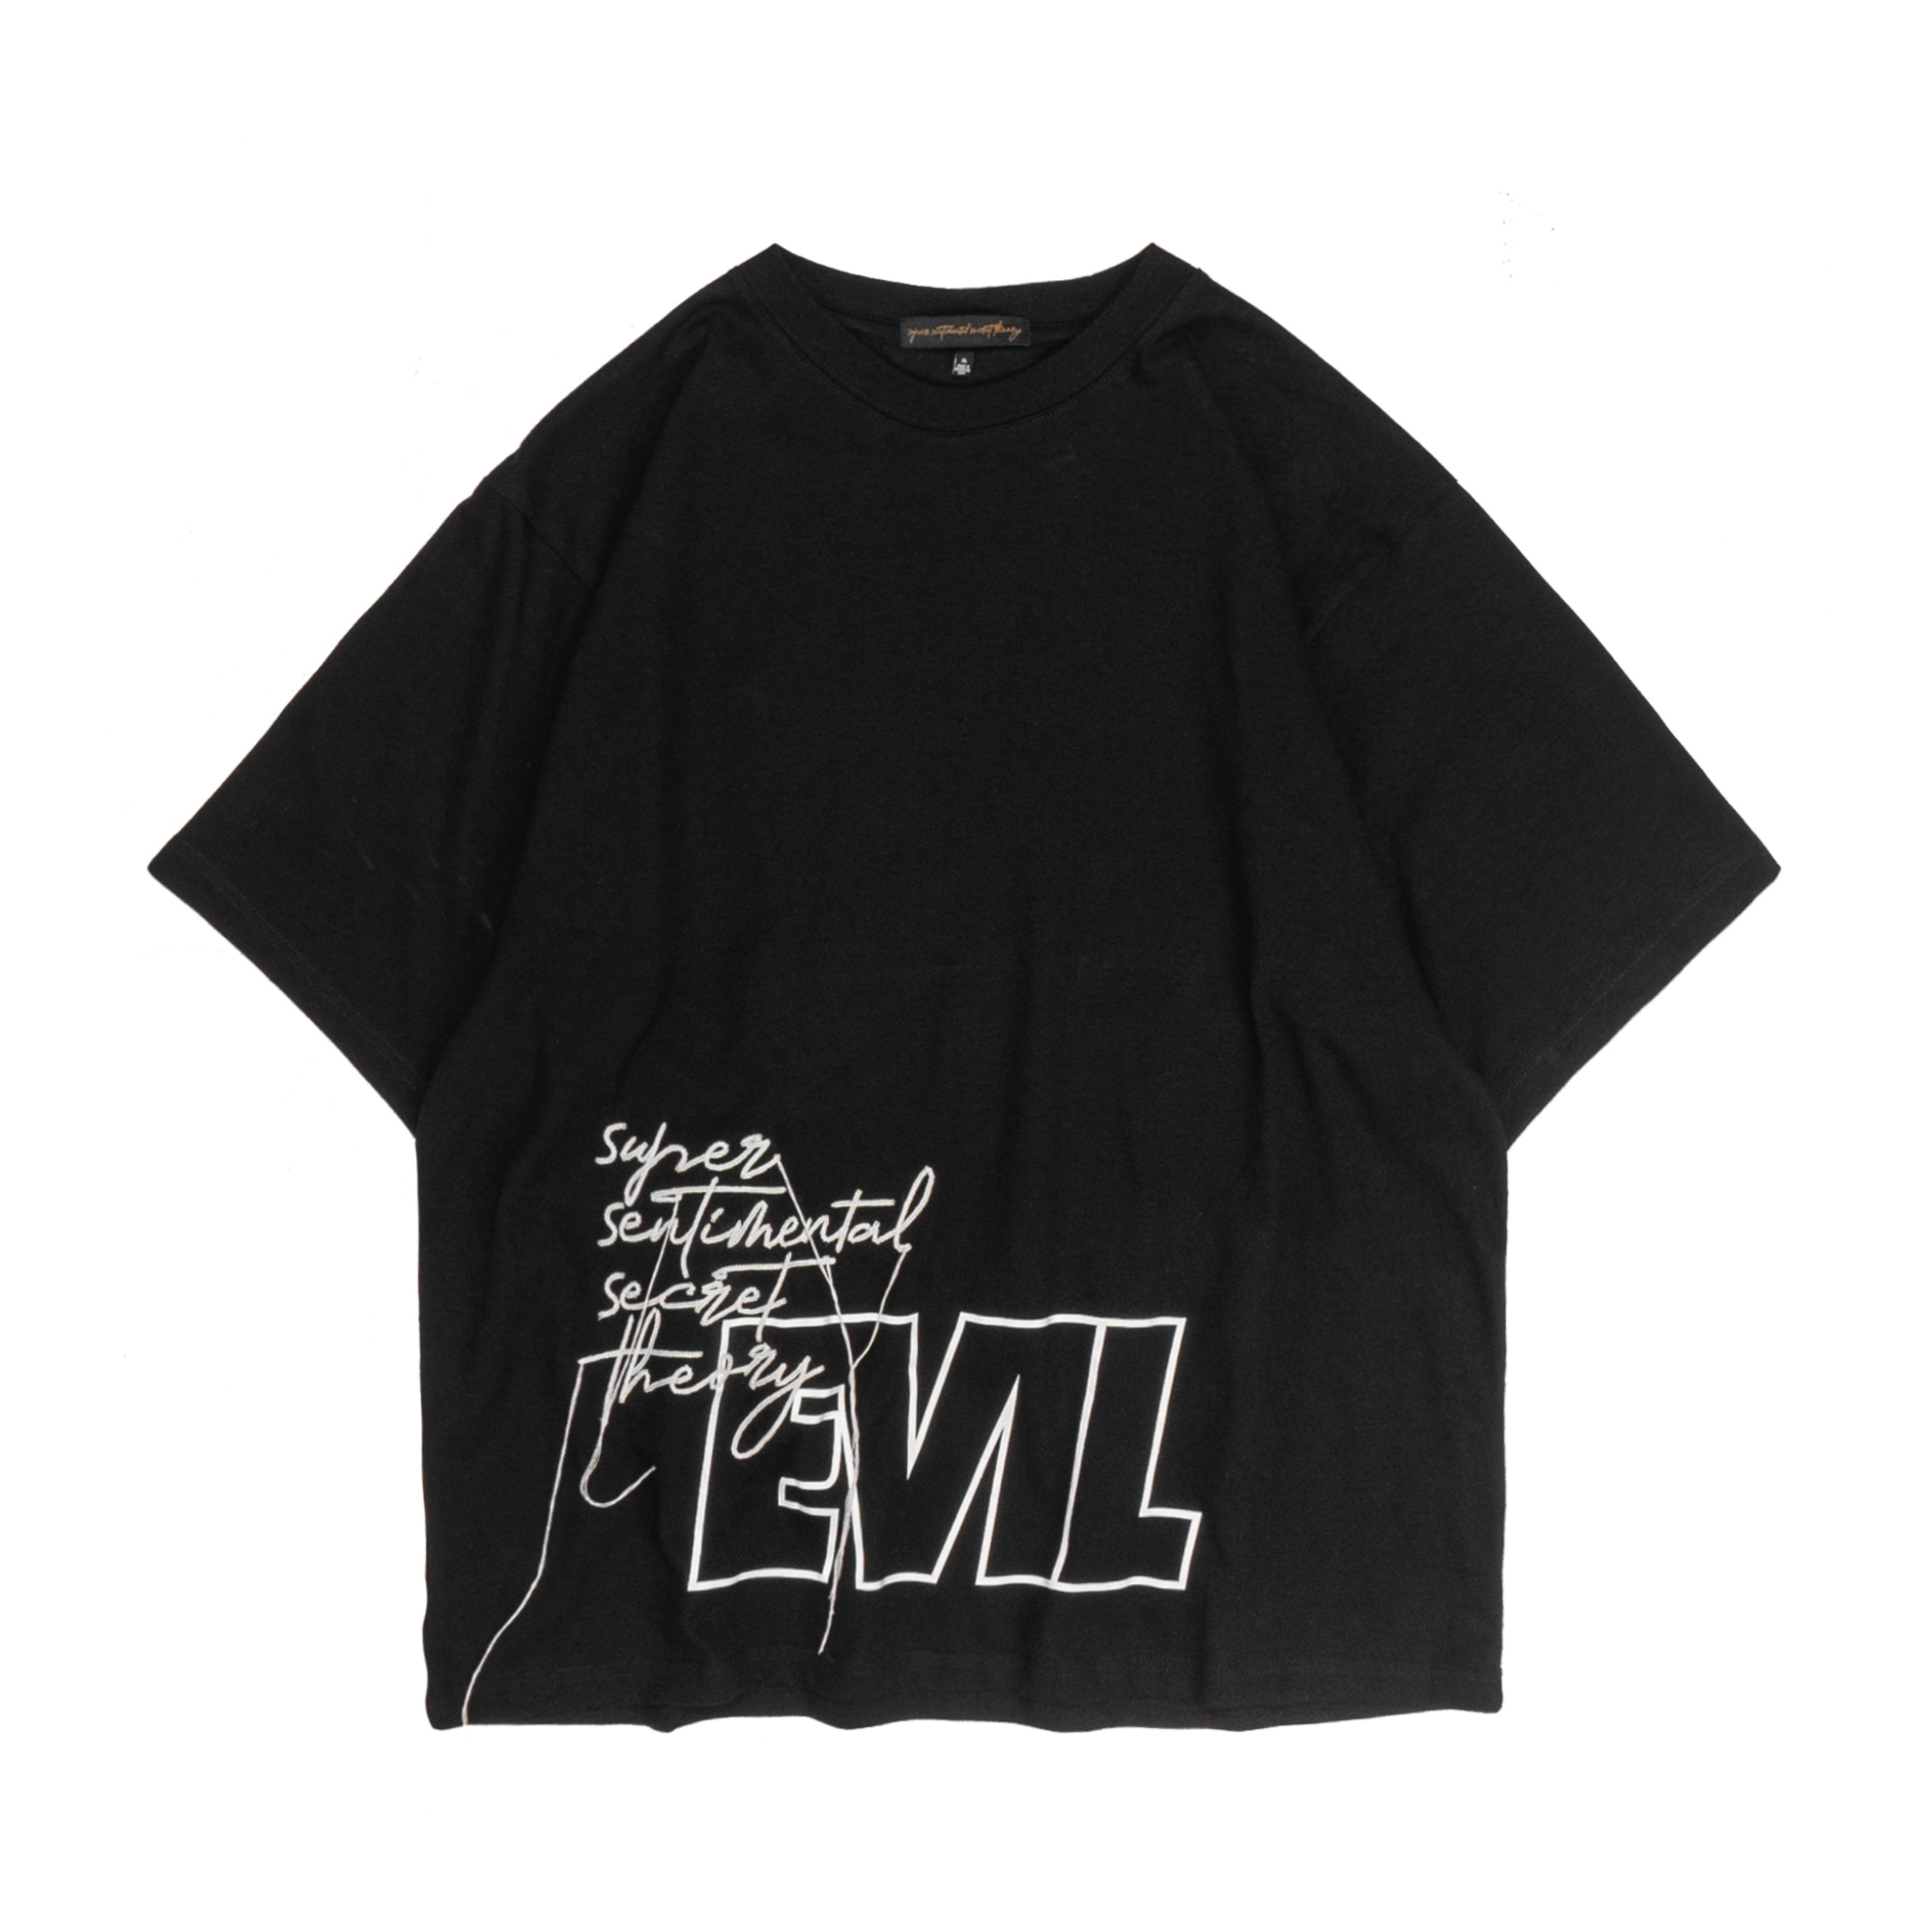 Unholy Oversize Tshirt – Inspired by EVIL – Super Sentimental Secret Theory